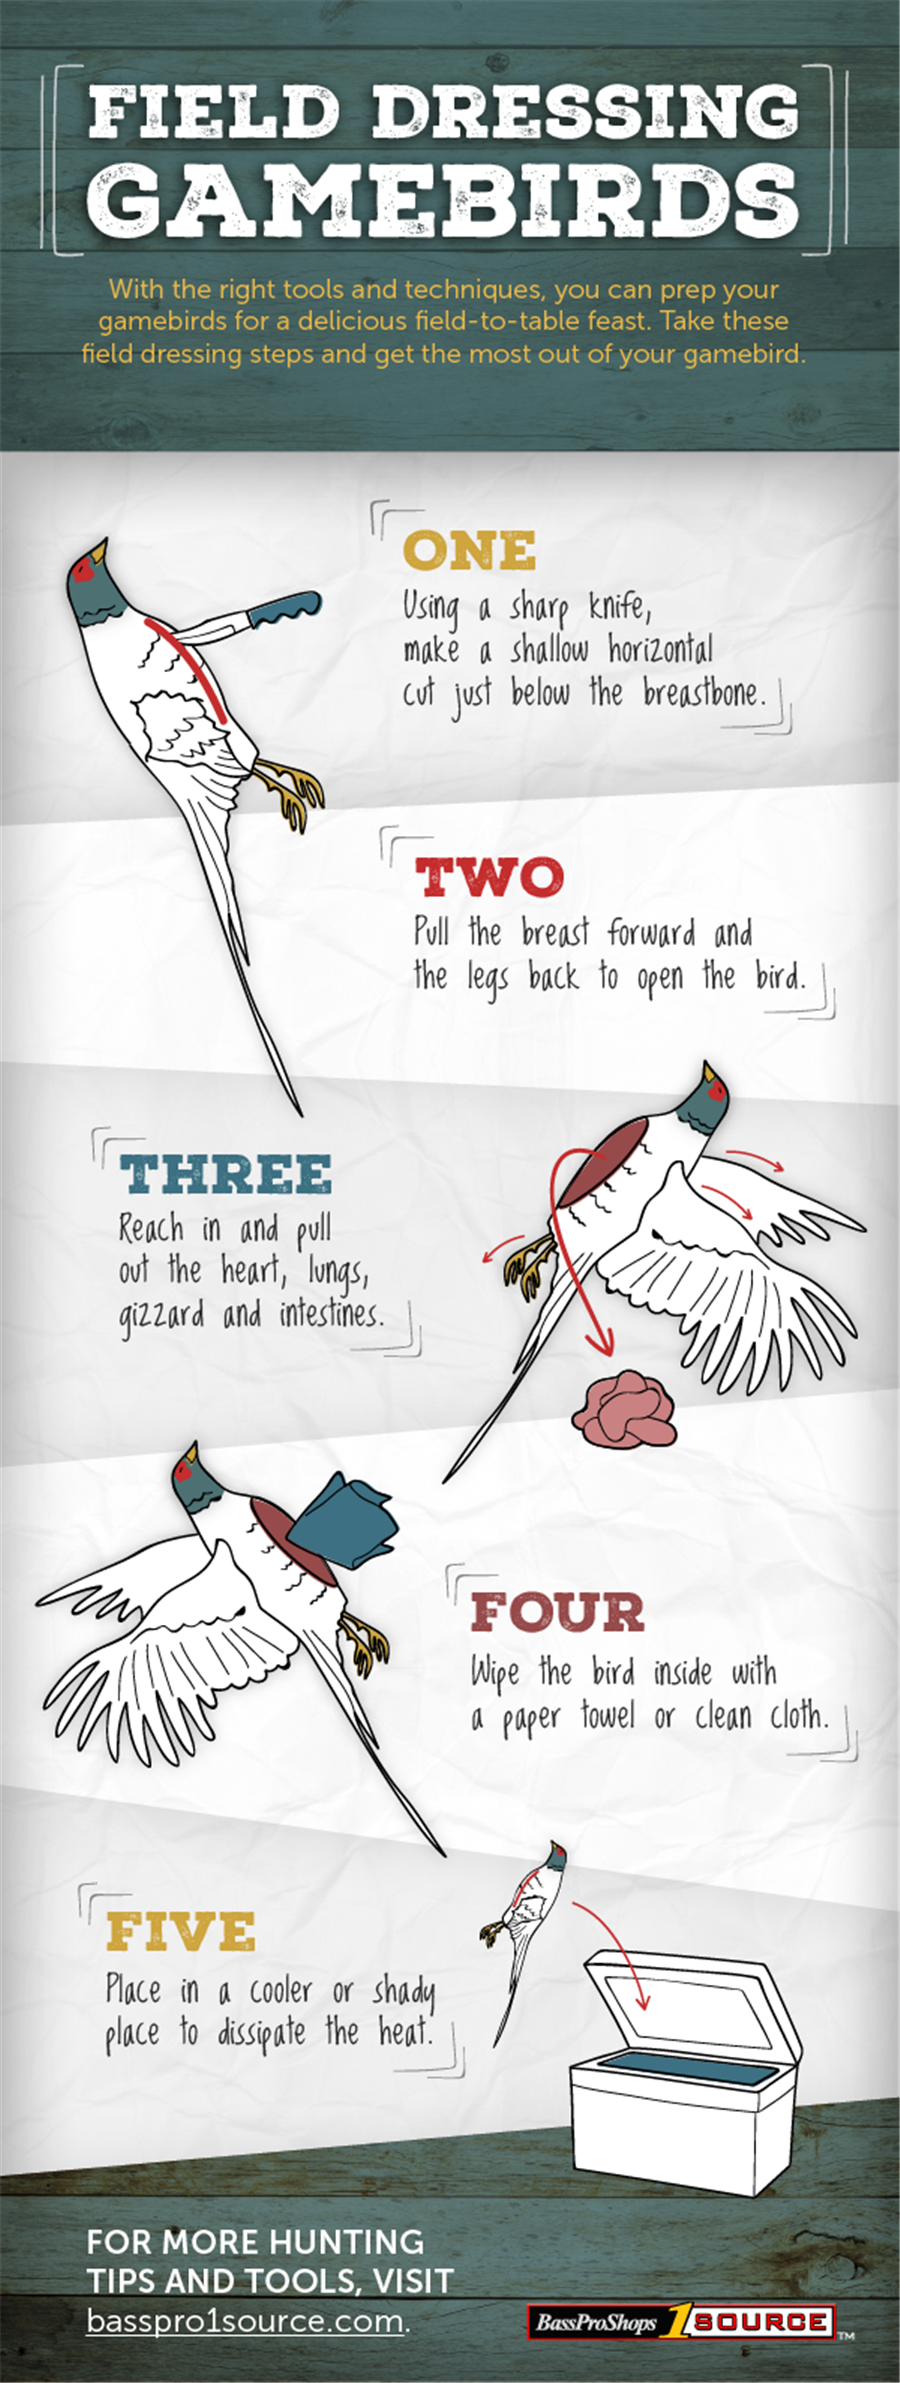 Artwork showing five steps to field dressing a gamebird